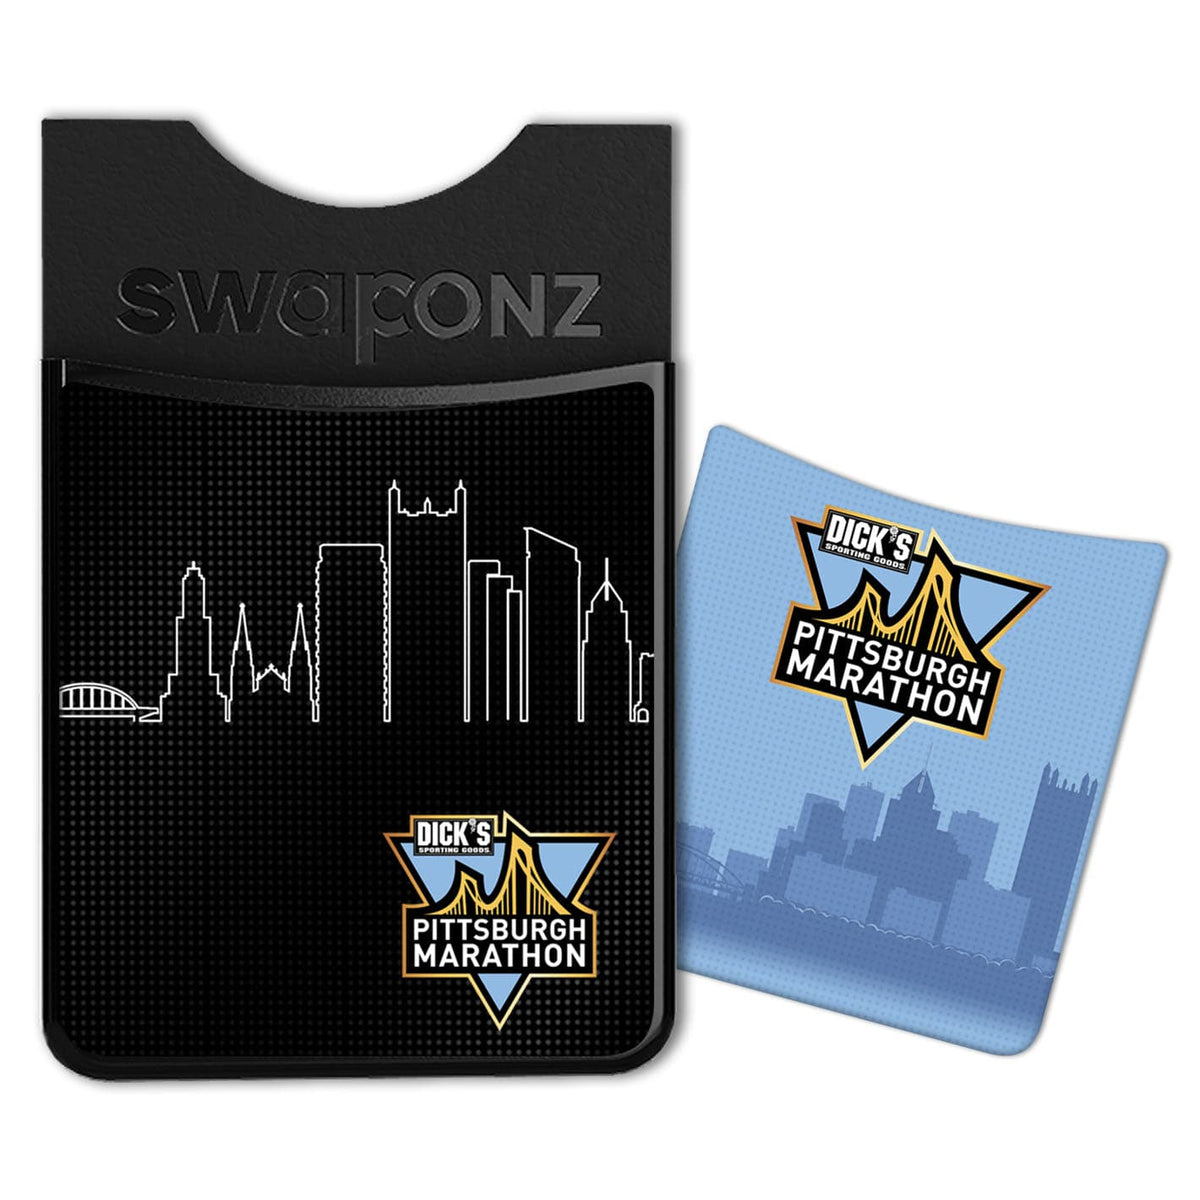 Phone Wallet Set - Pittsburgh Marathon 1